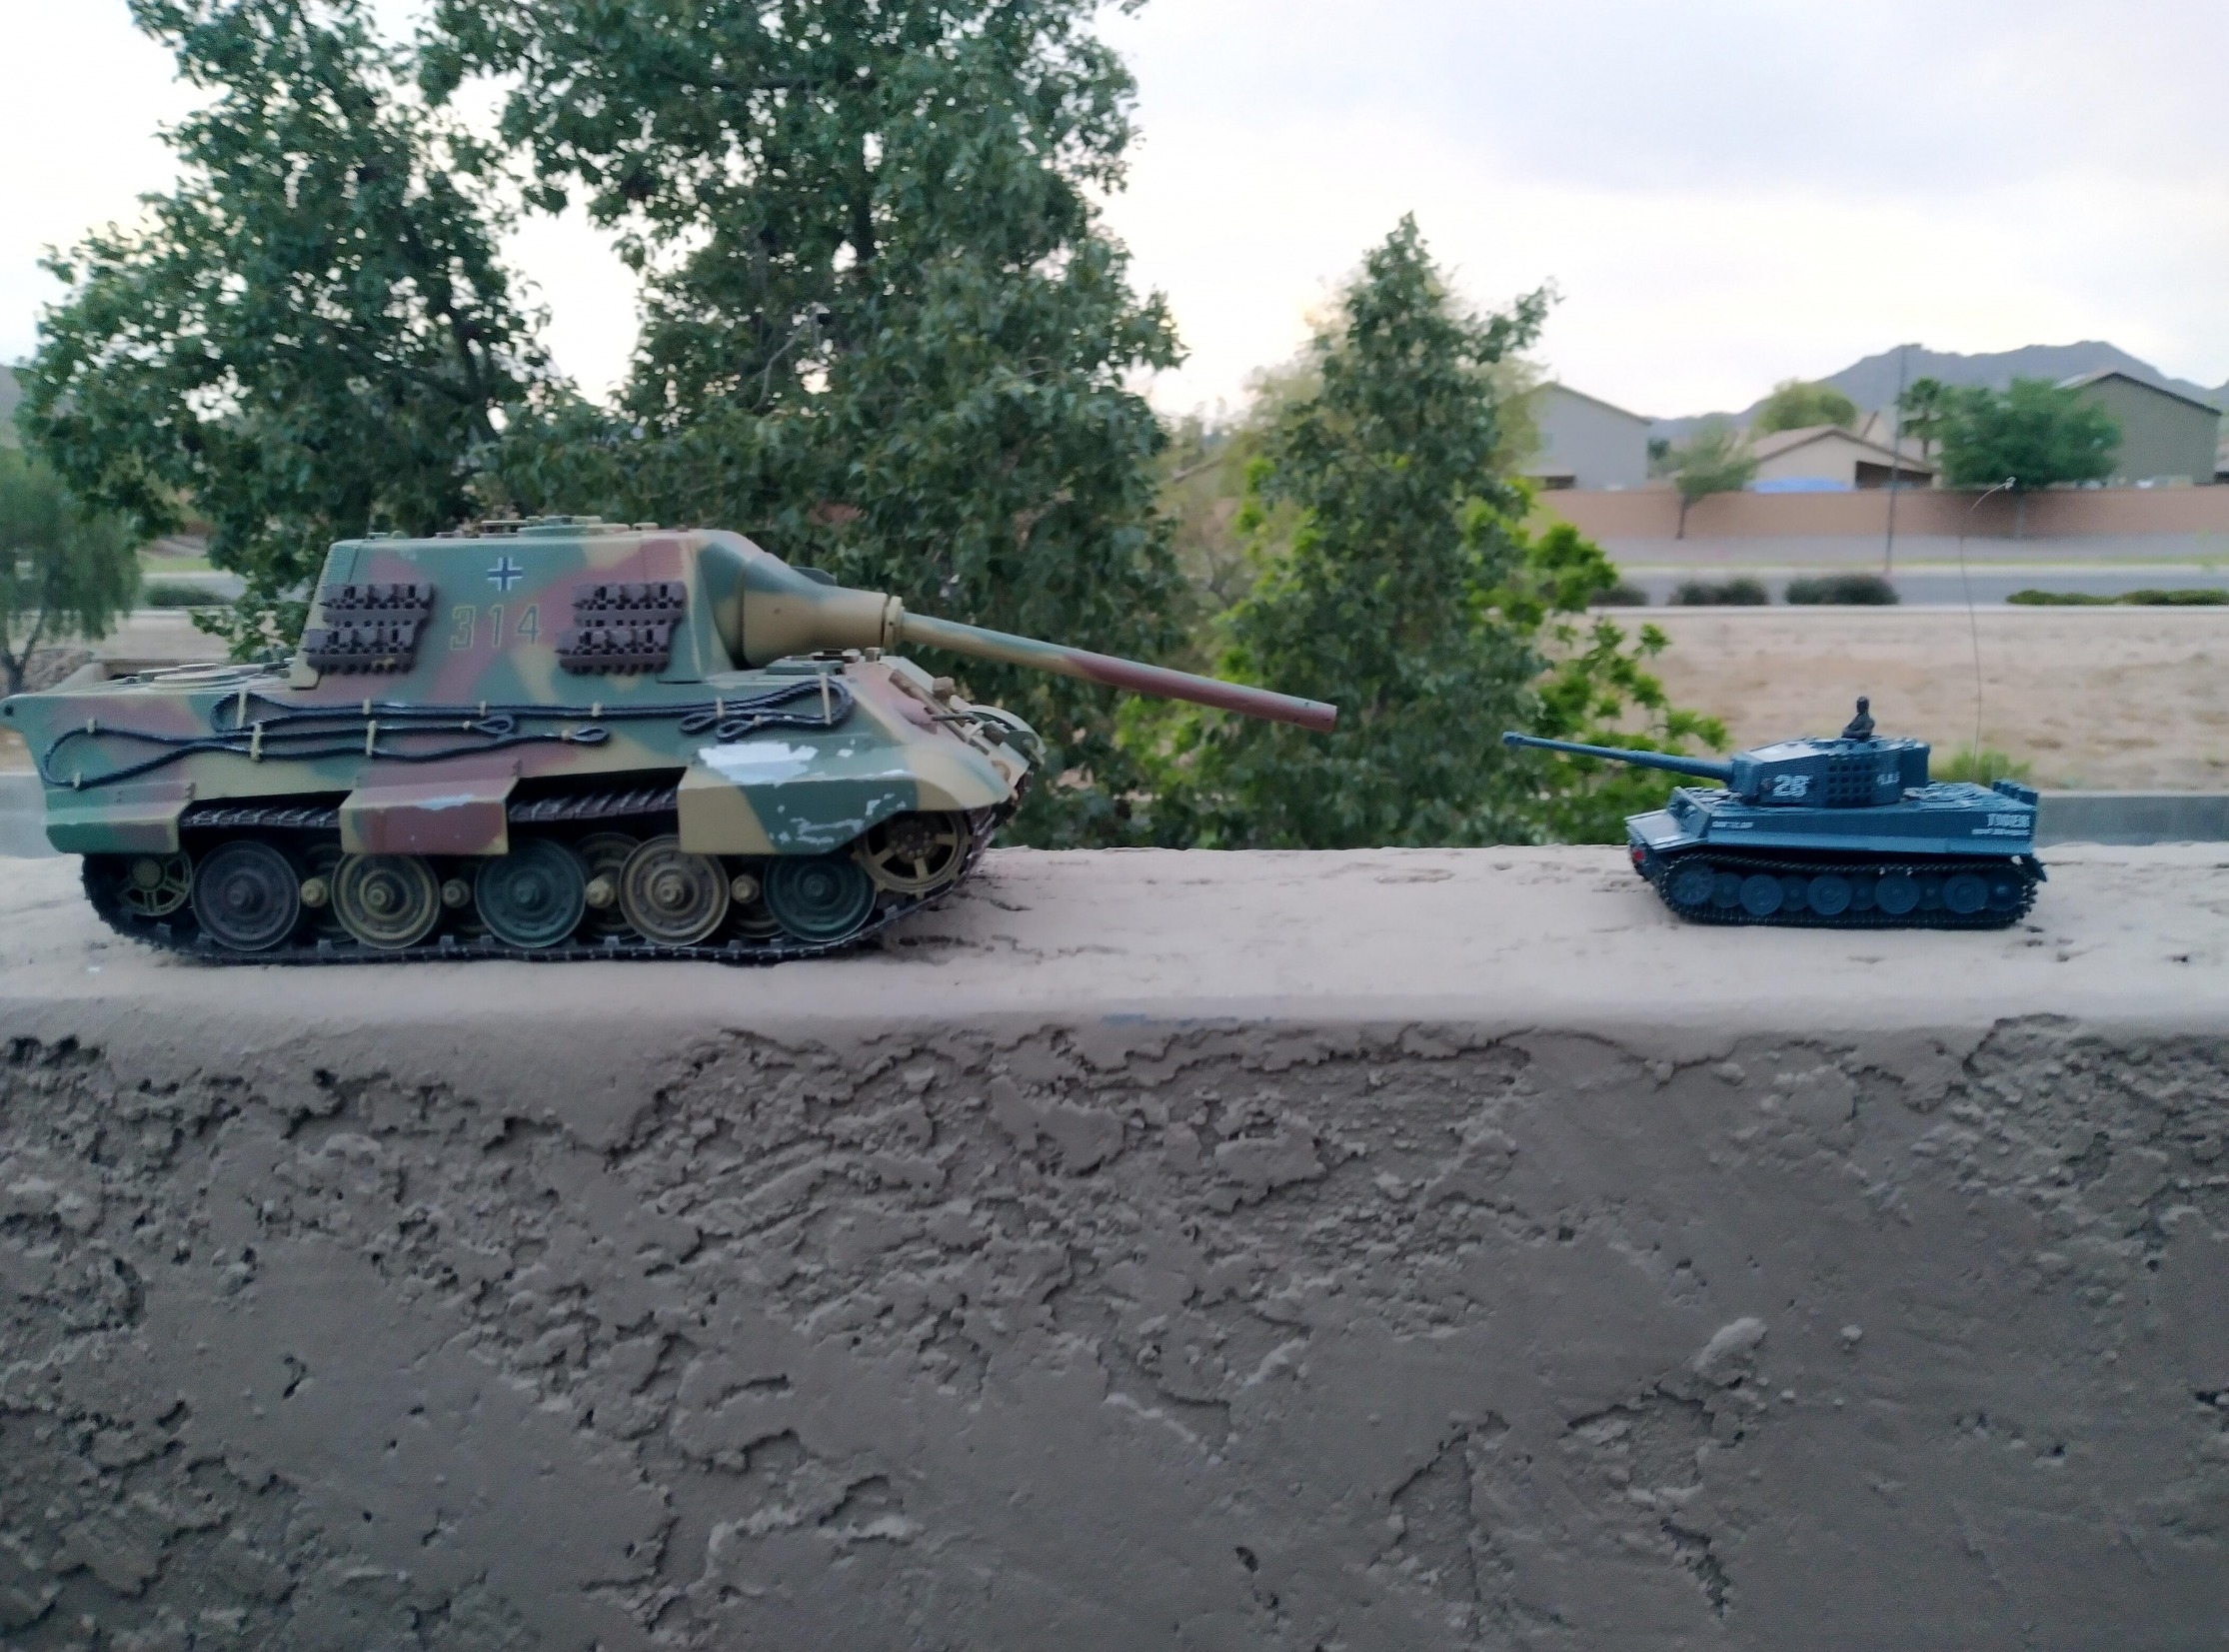 first tank vs tank battle